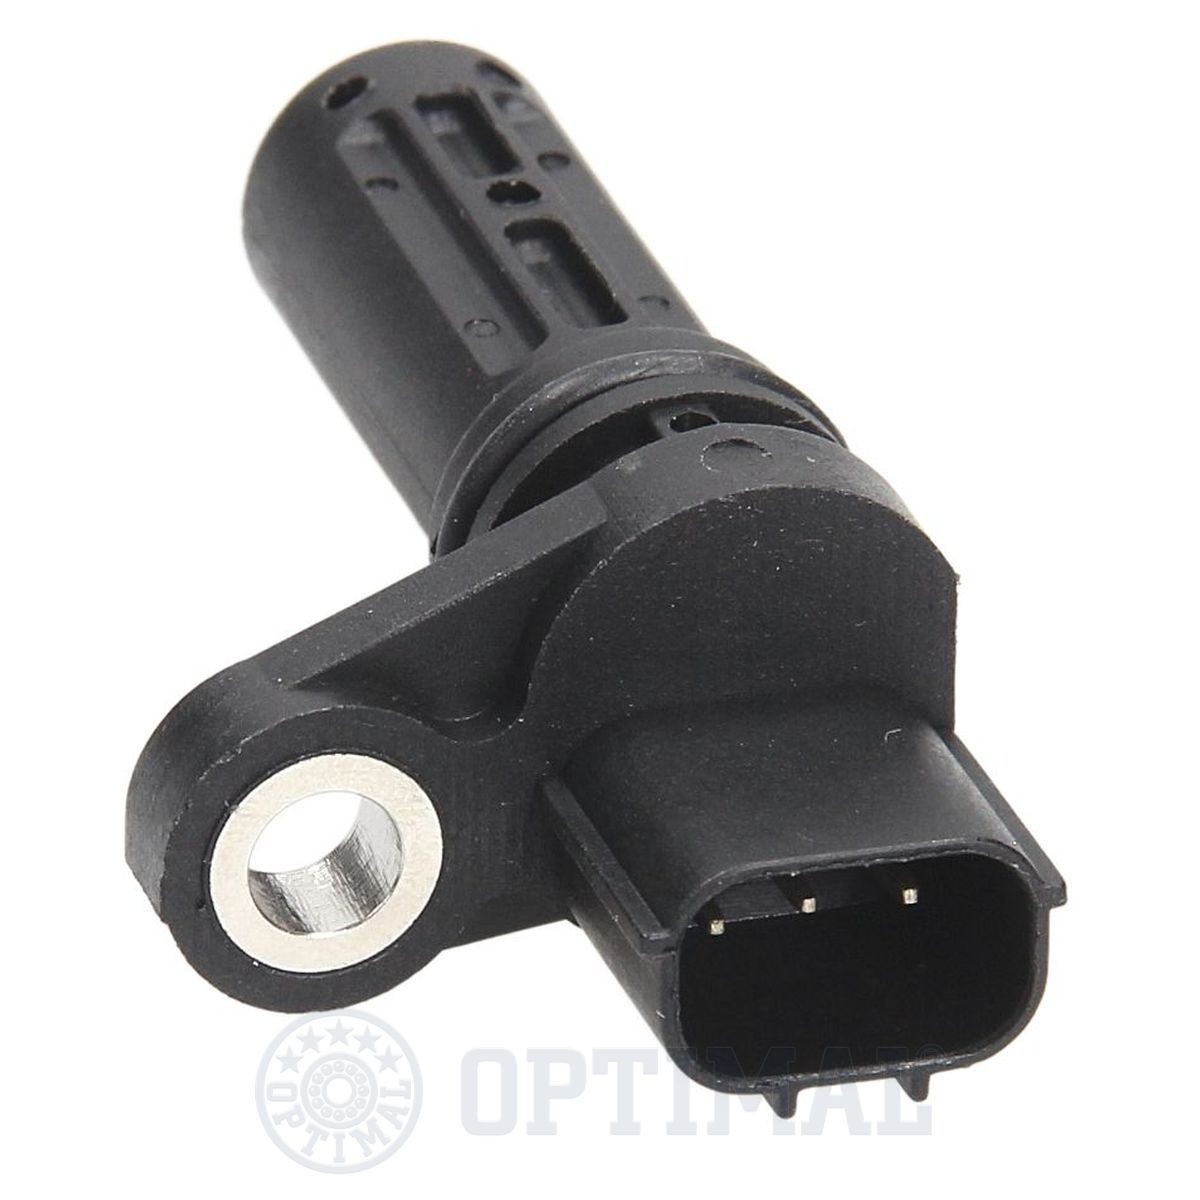 OPTIMAL 07-S005 Crankshaft sensor 2-pin connector, Passive sensor